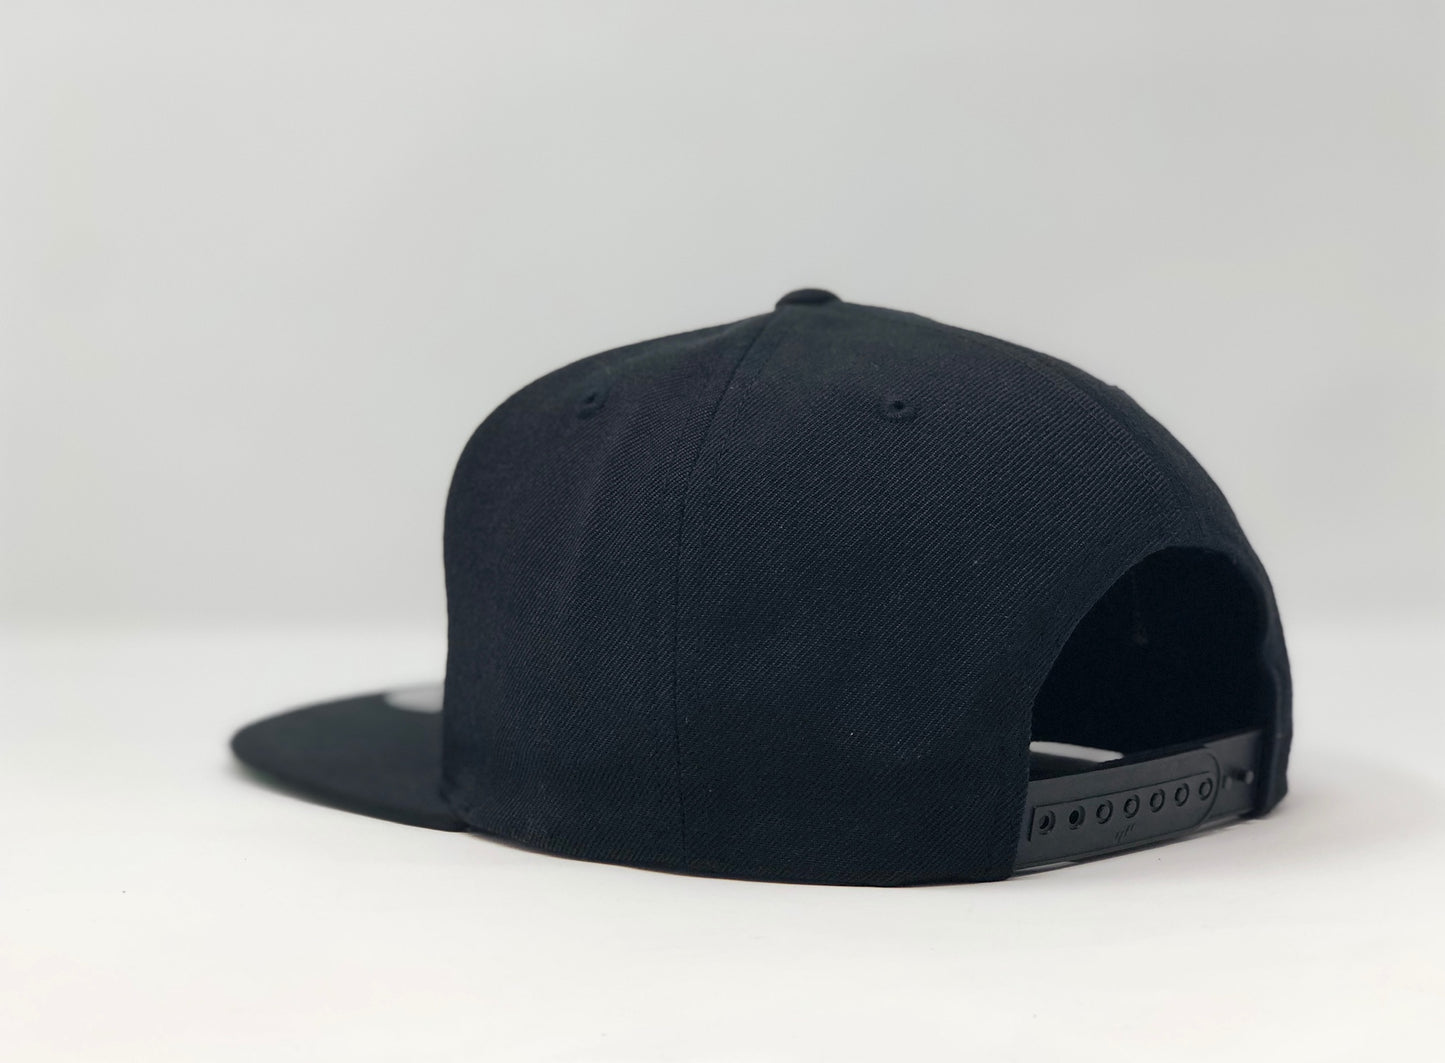 Arizoniacs Logo Flatbill Snapback Cap - Black/Black